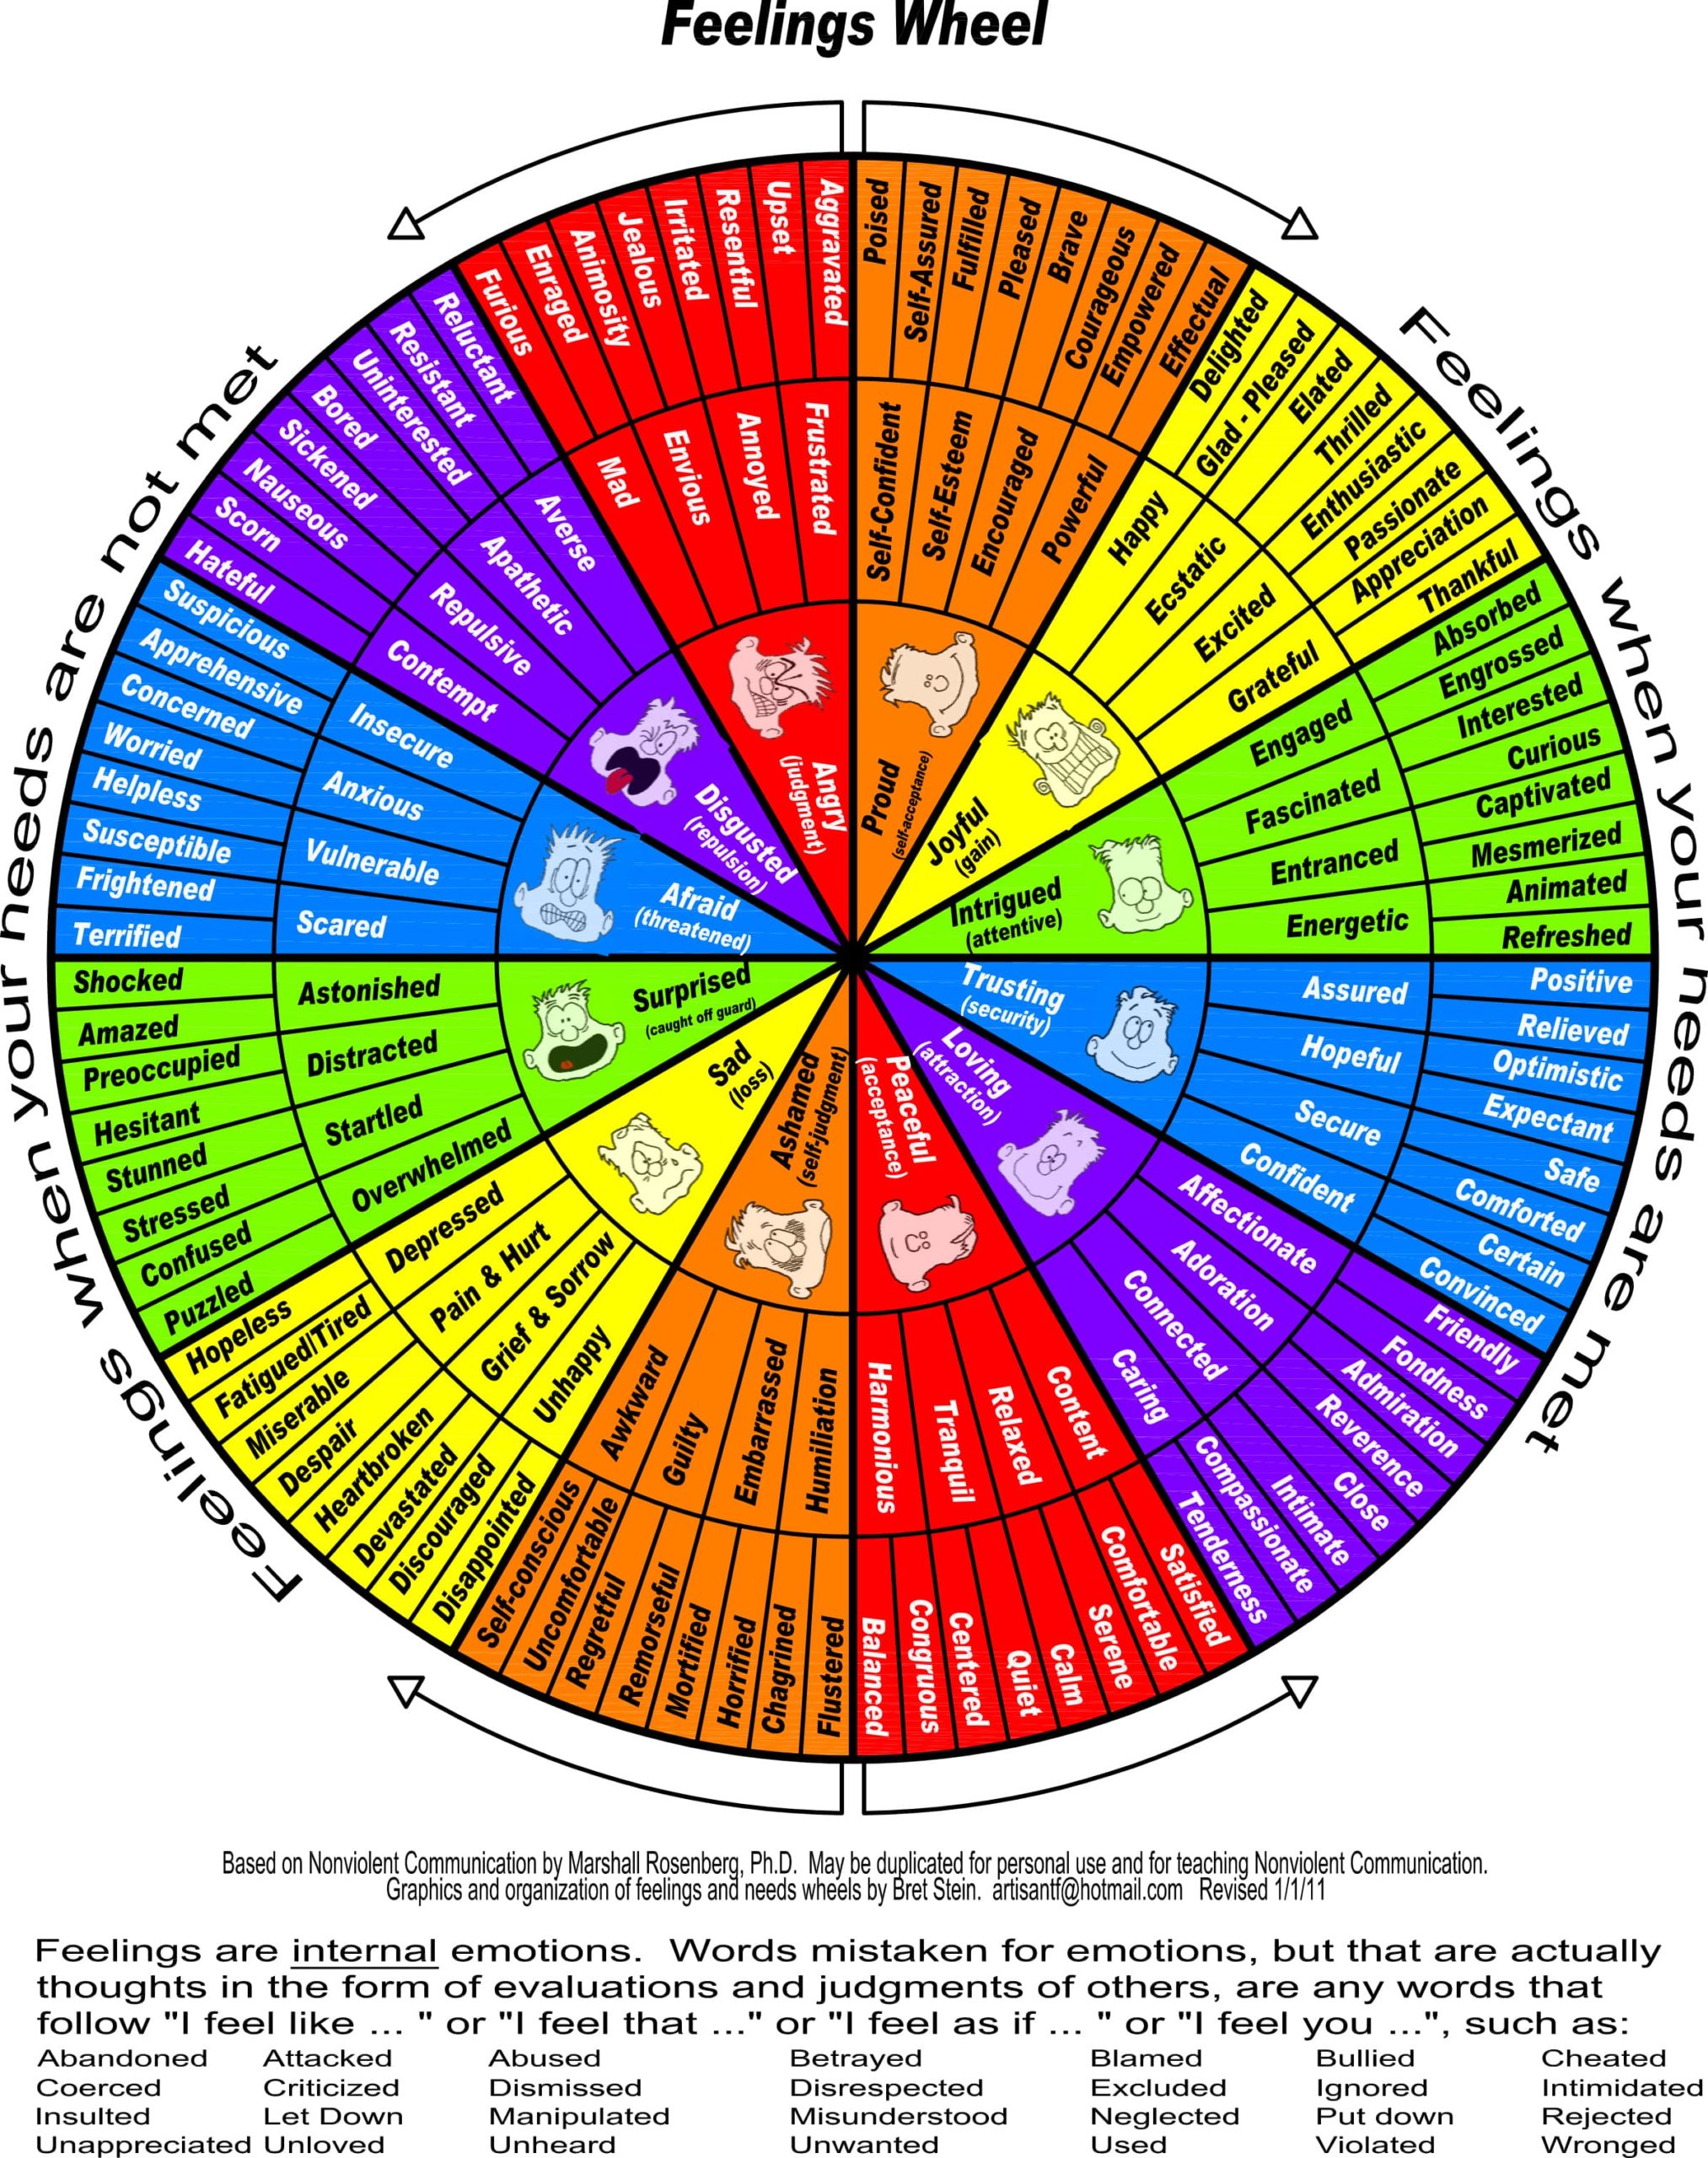 Feelings Wheel Based on NonViolent Communication Method